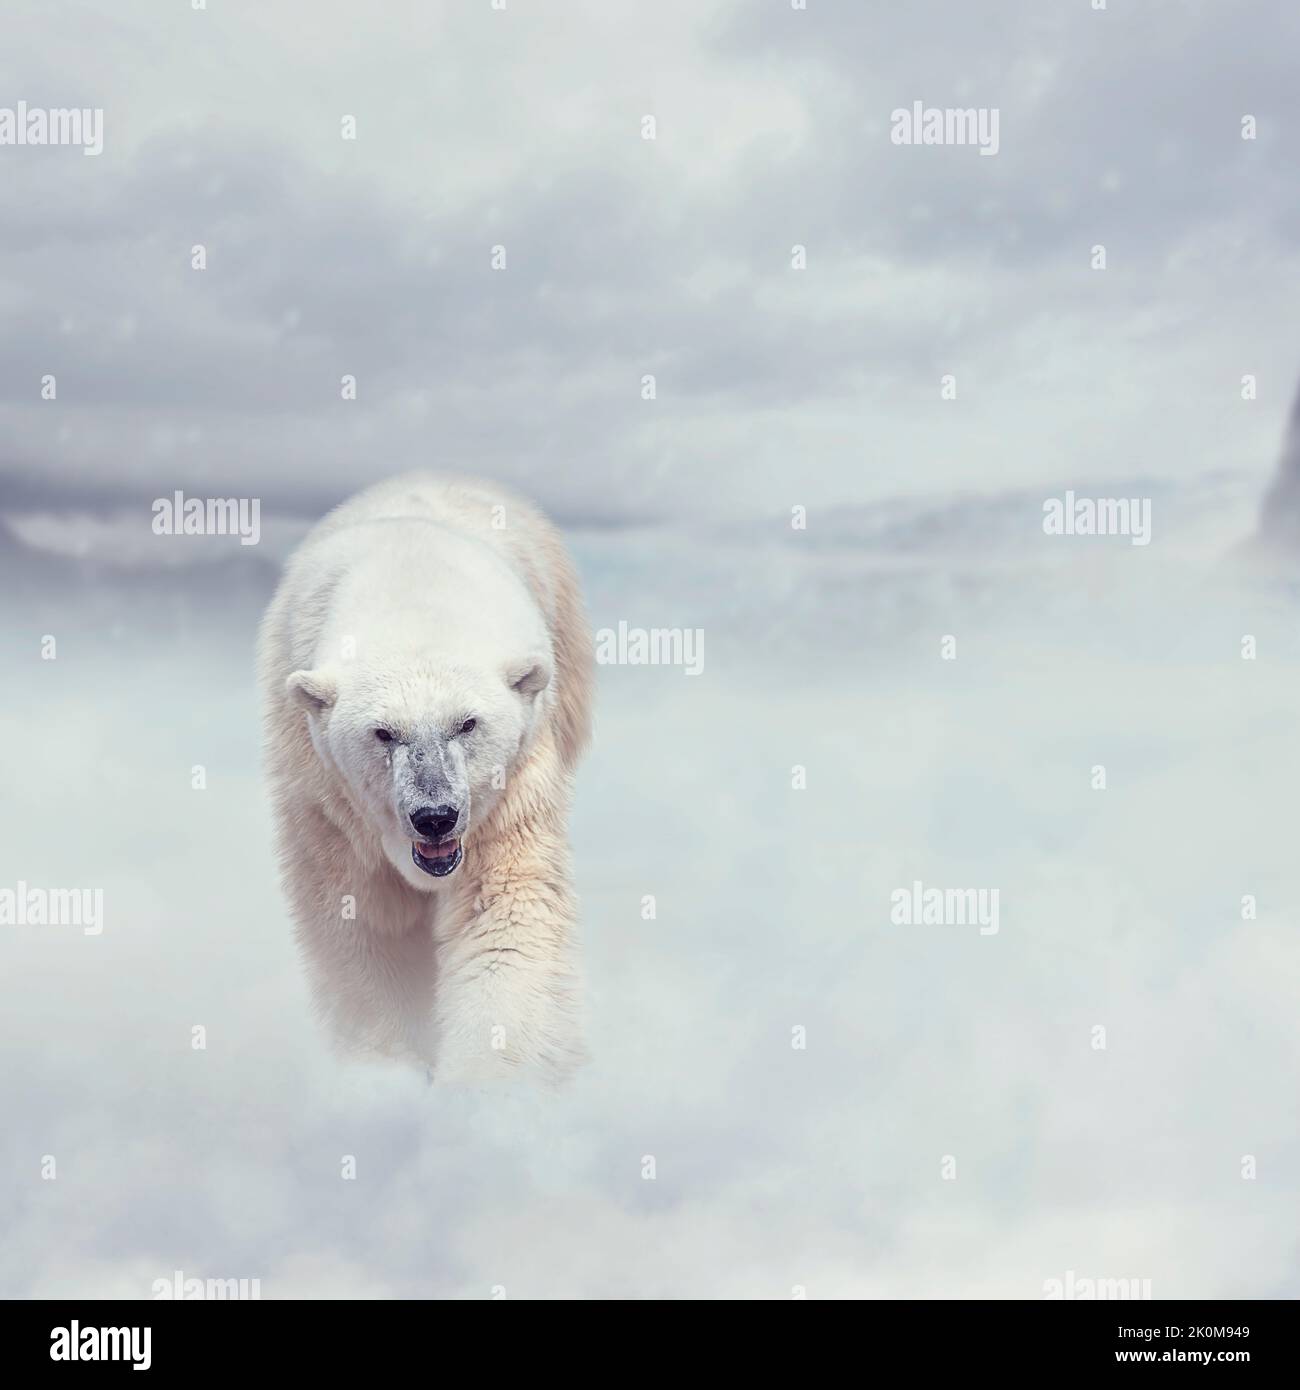 Large Polar bear walking on snow Stock Photo